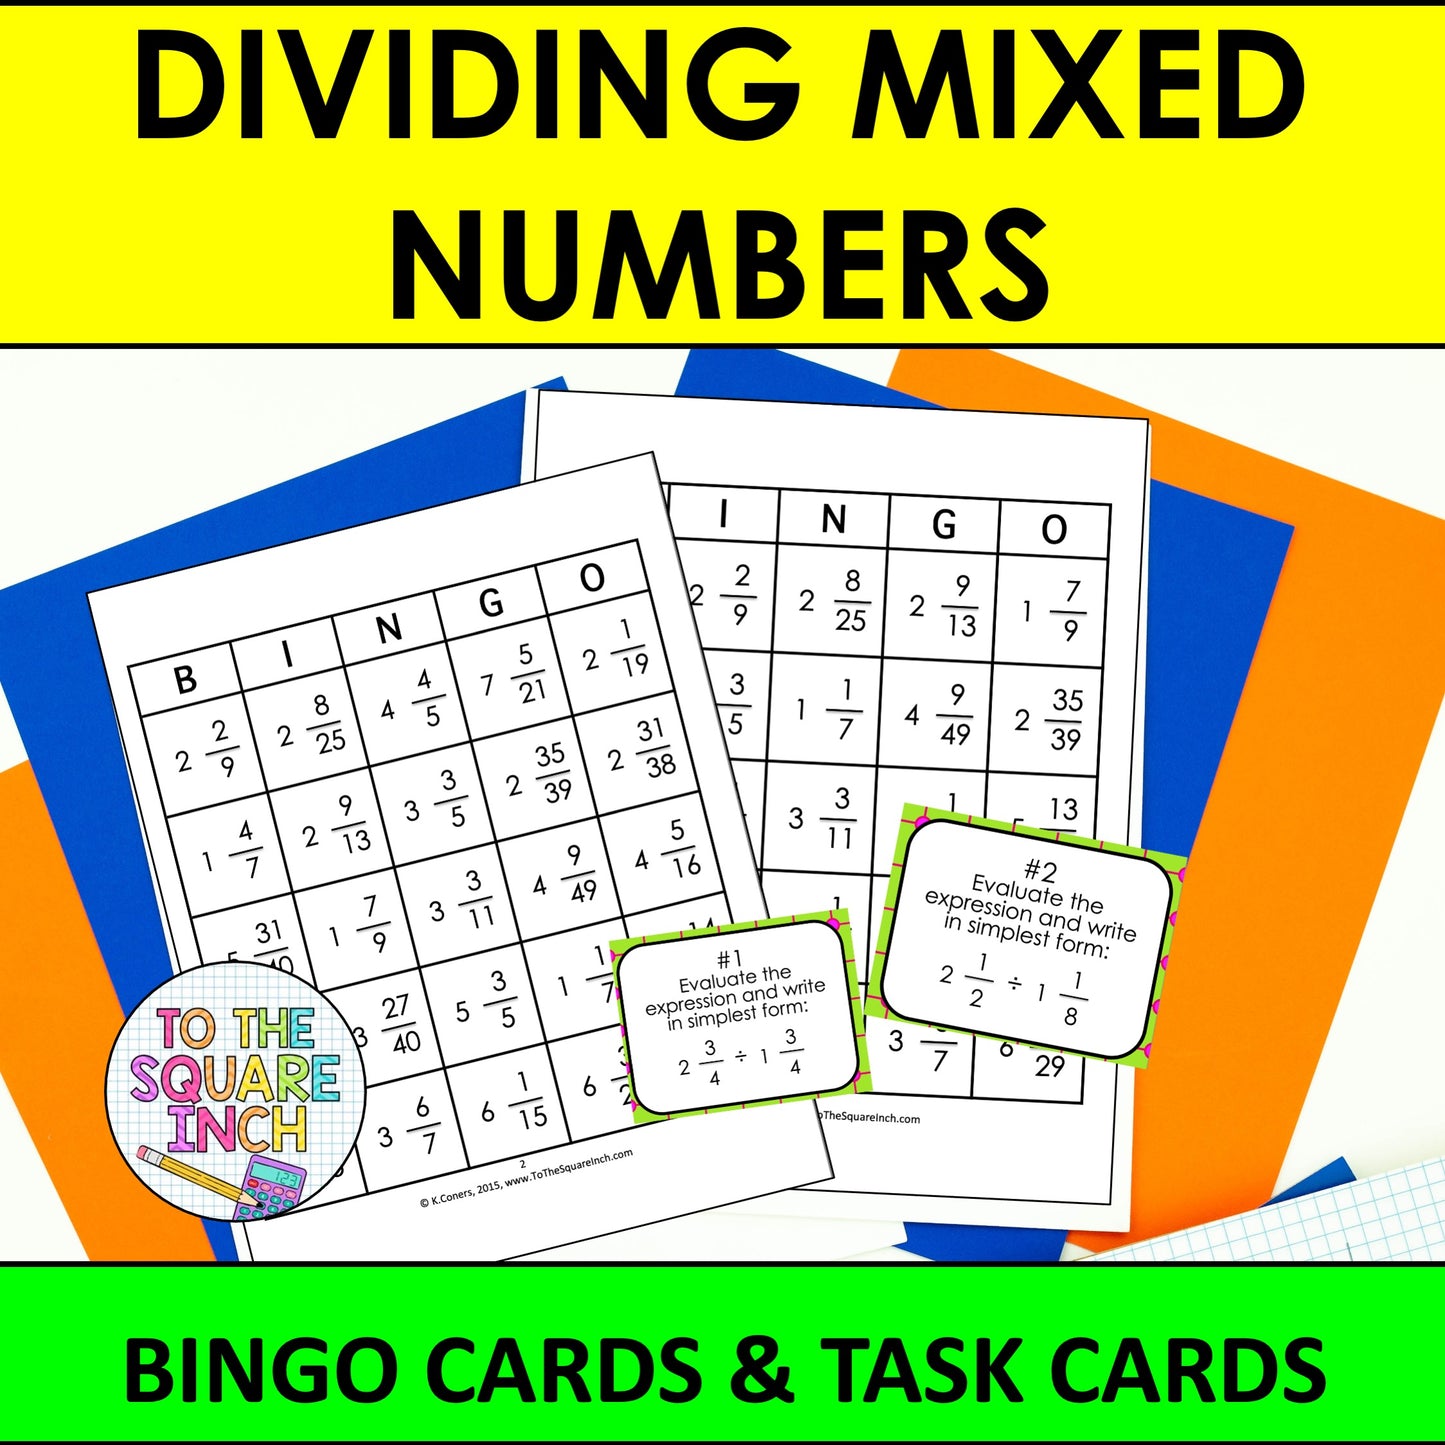 Dividing Mixed Numbers Bingo Game